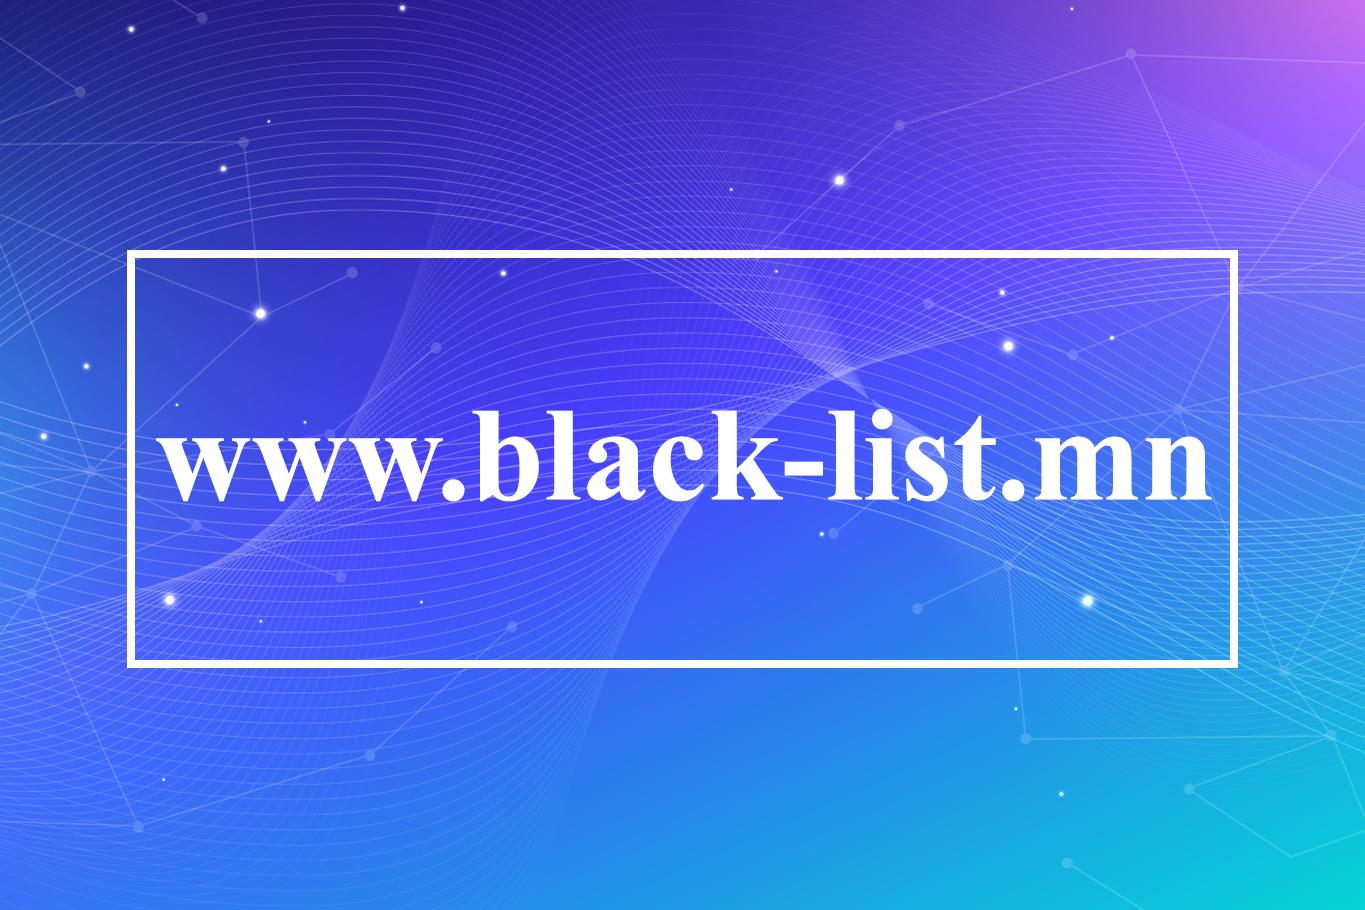 www.black-list.mn